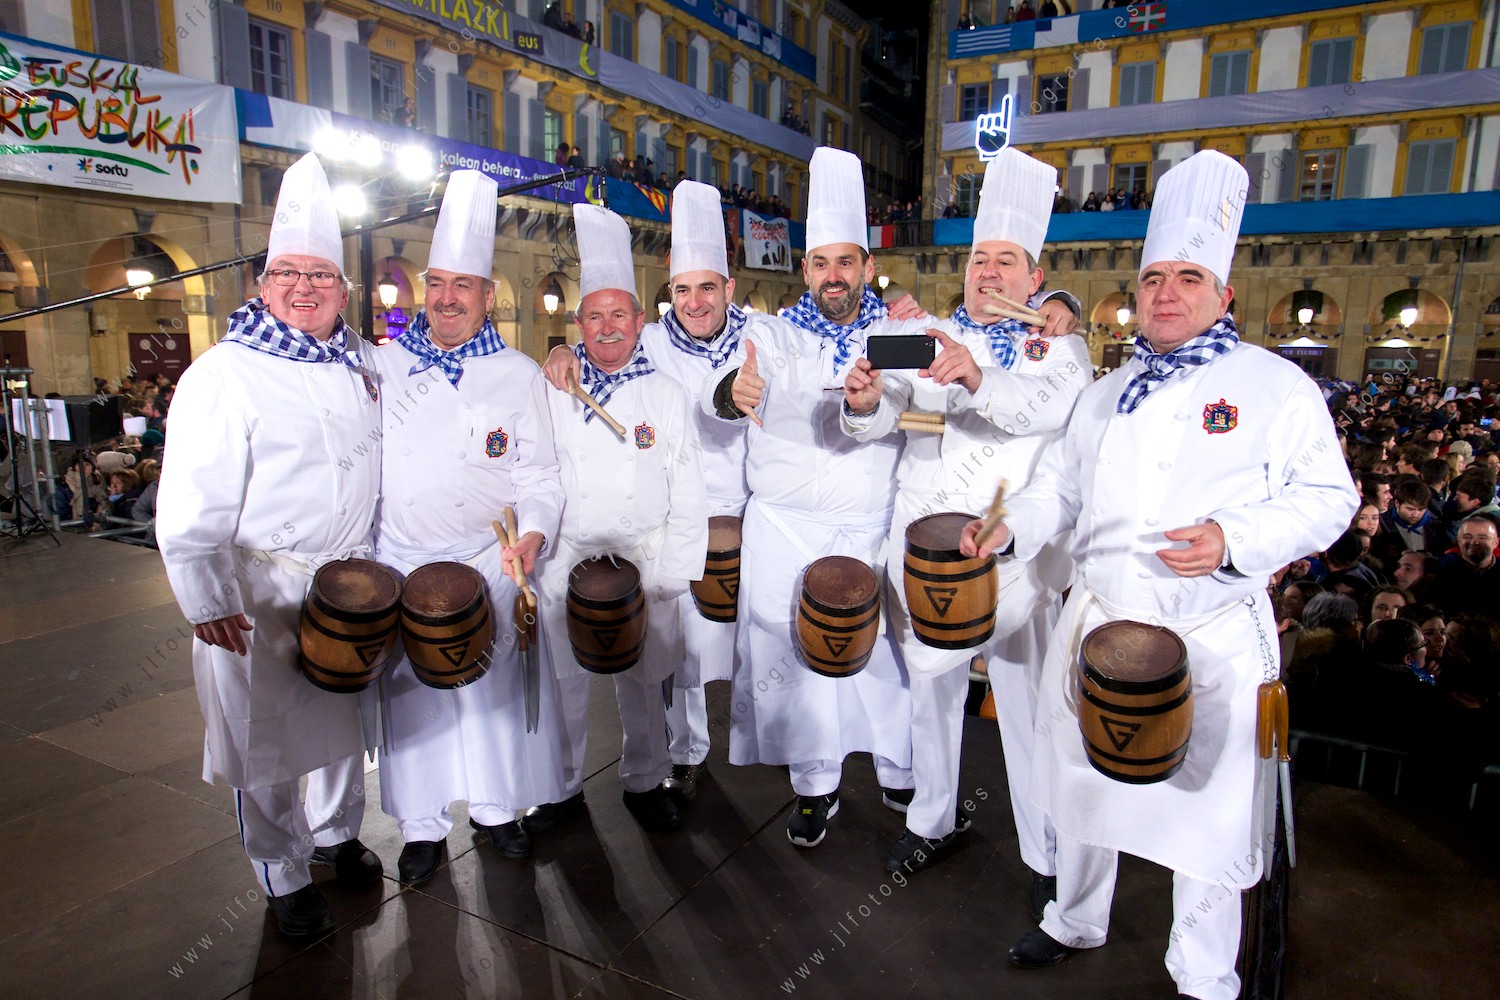 Grupo de cocineros vascos de reconocido prestigio en la tamborrada de San Sebastian.